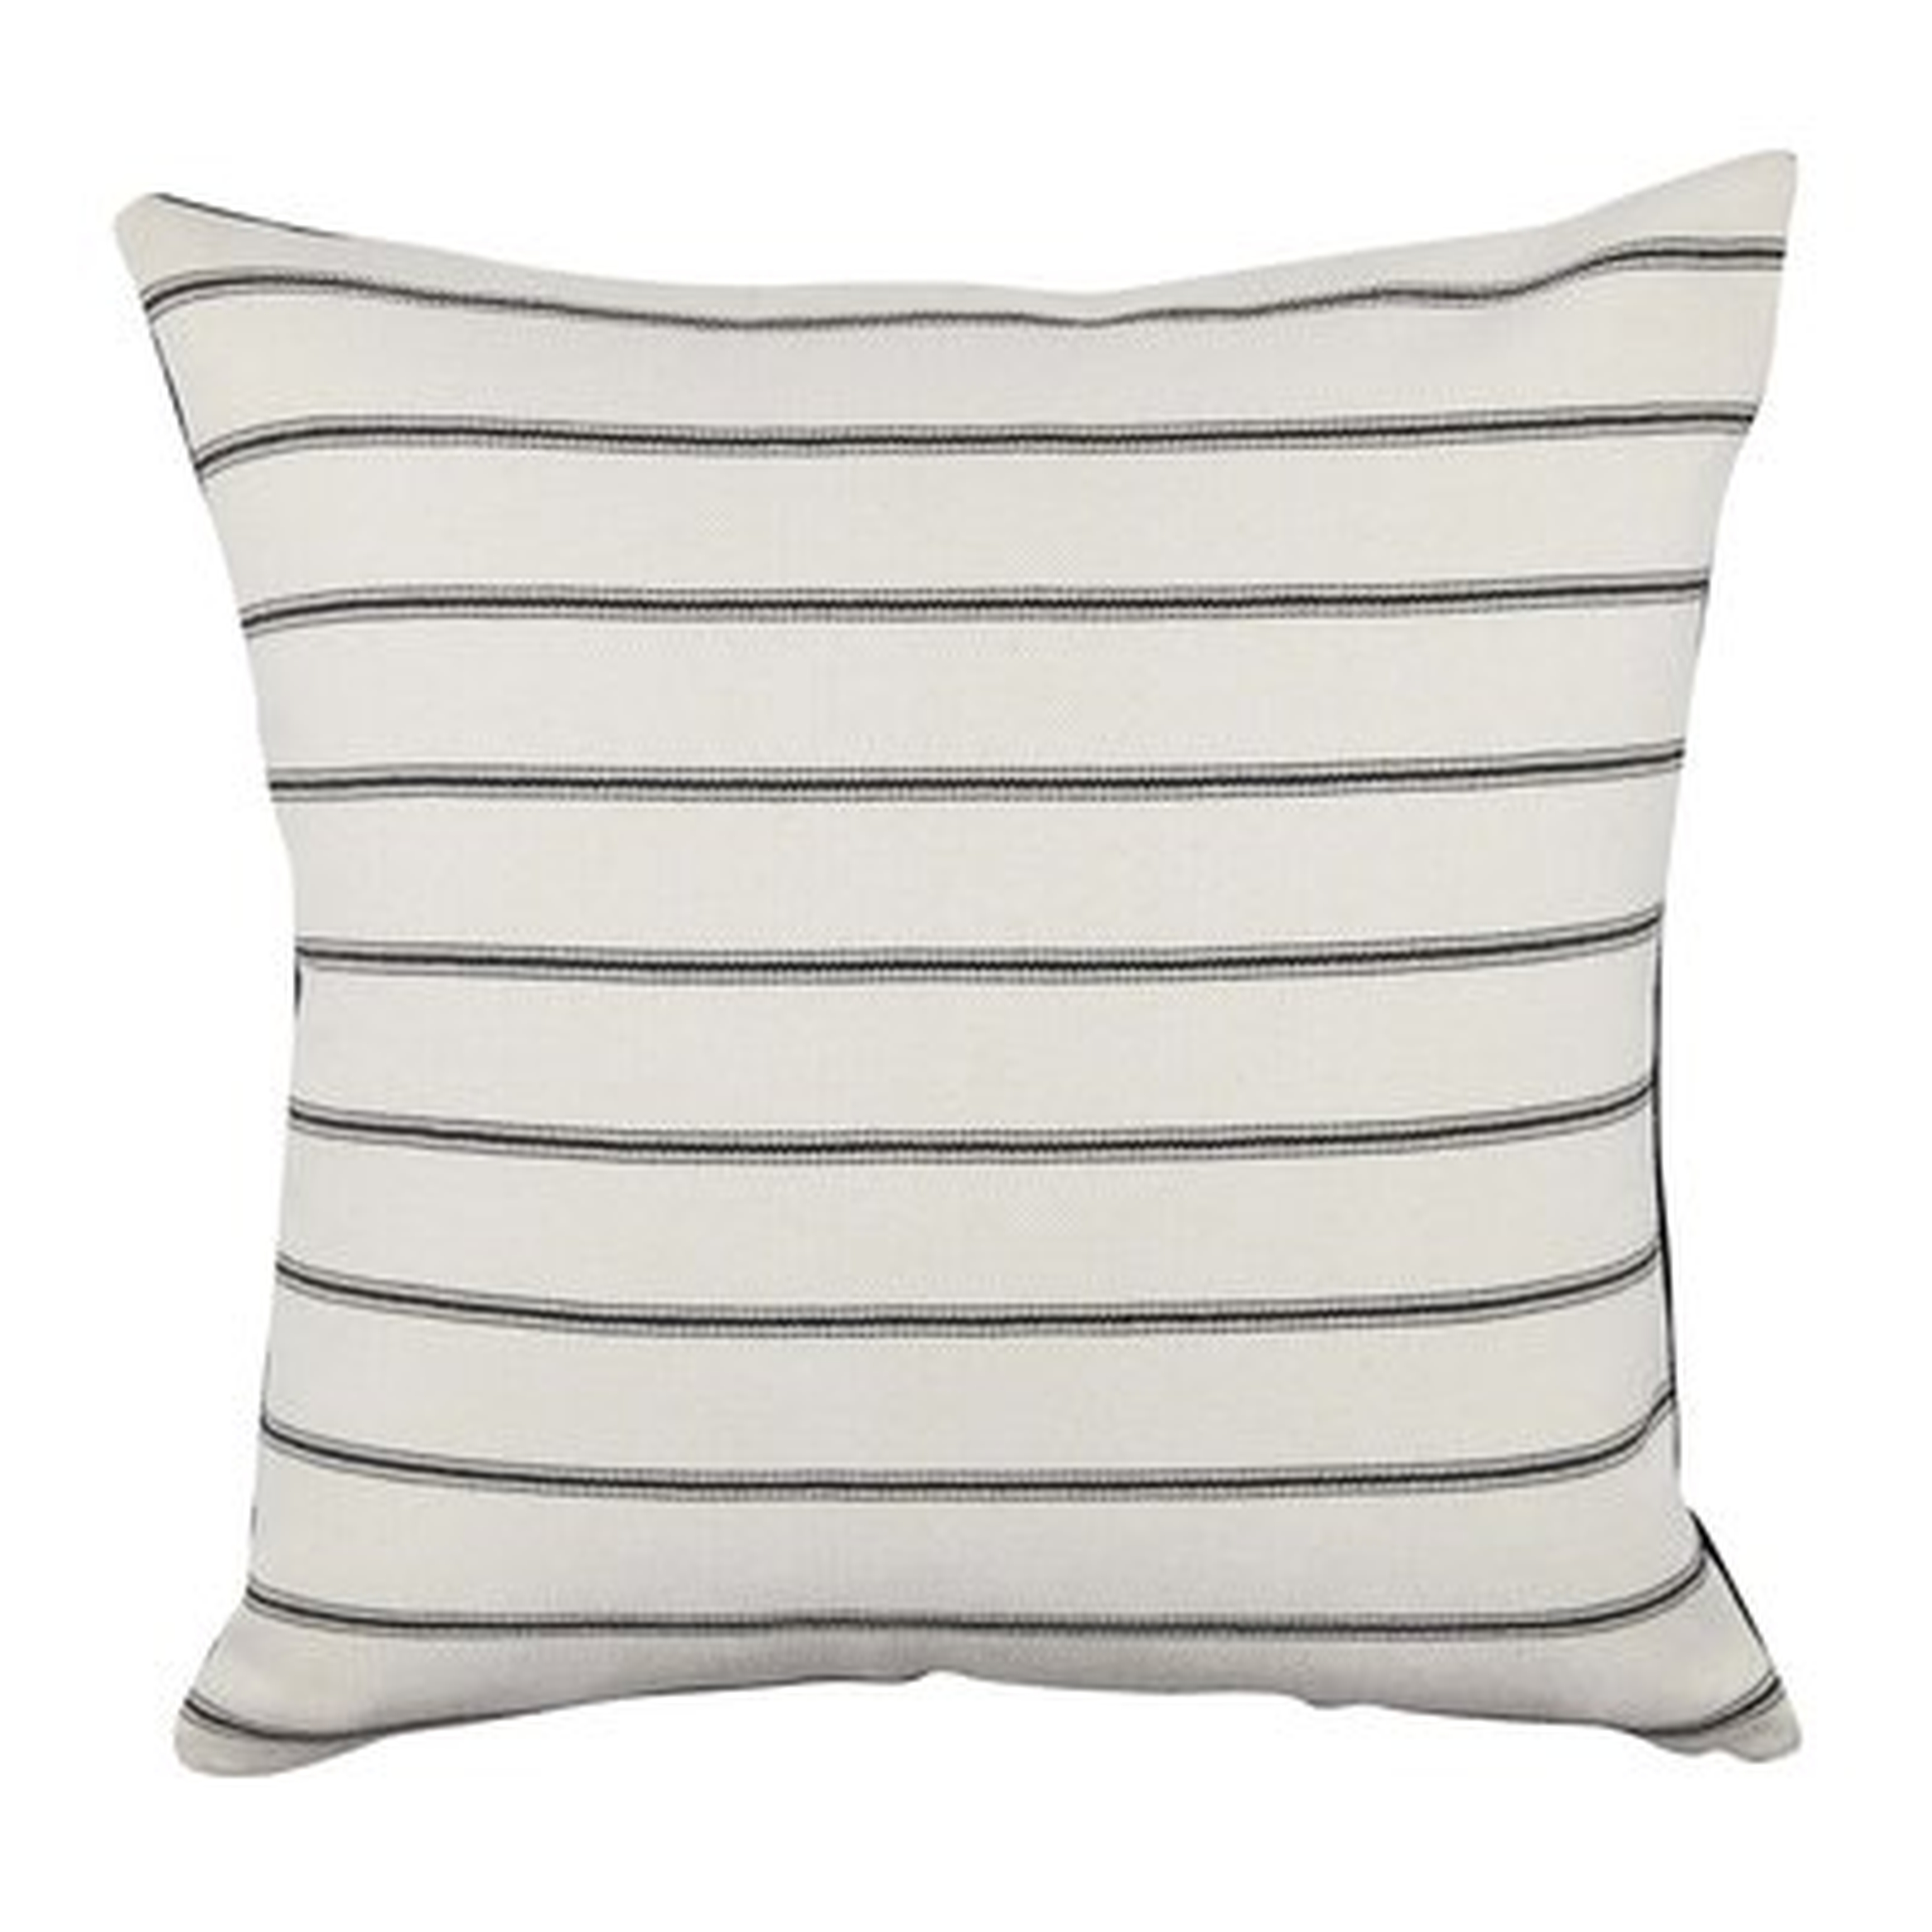 Ticking Stripe Fabric Throw Pillow - Wayfair